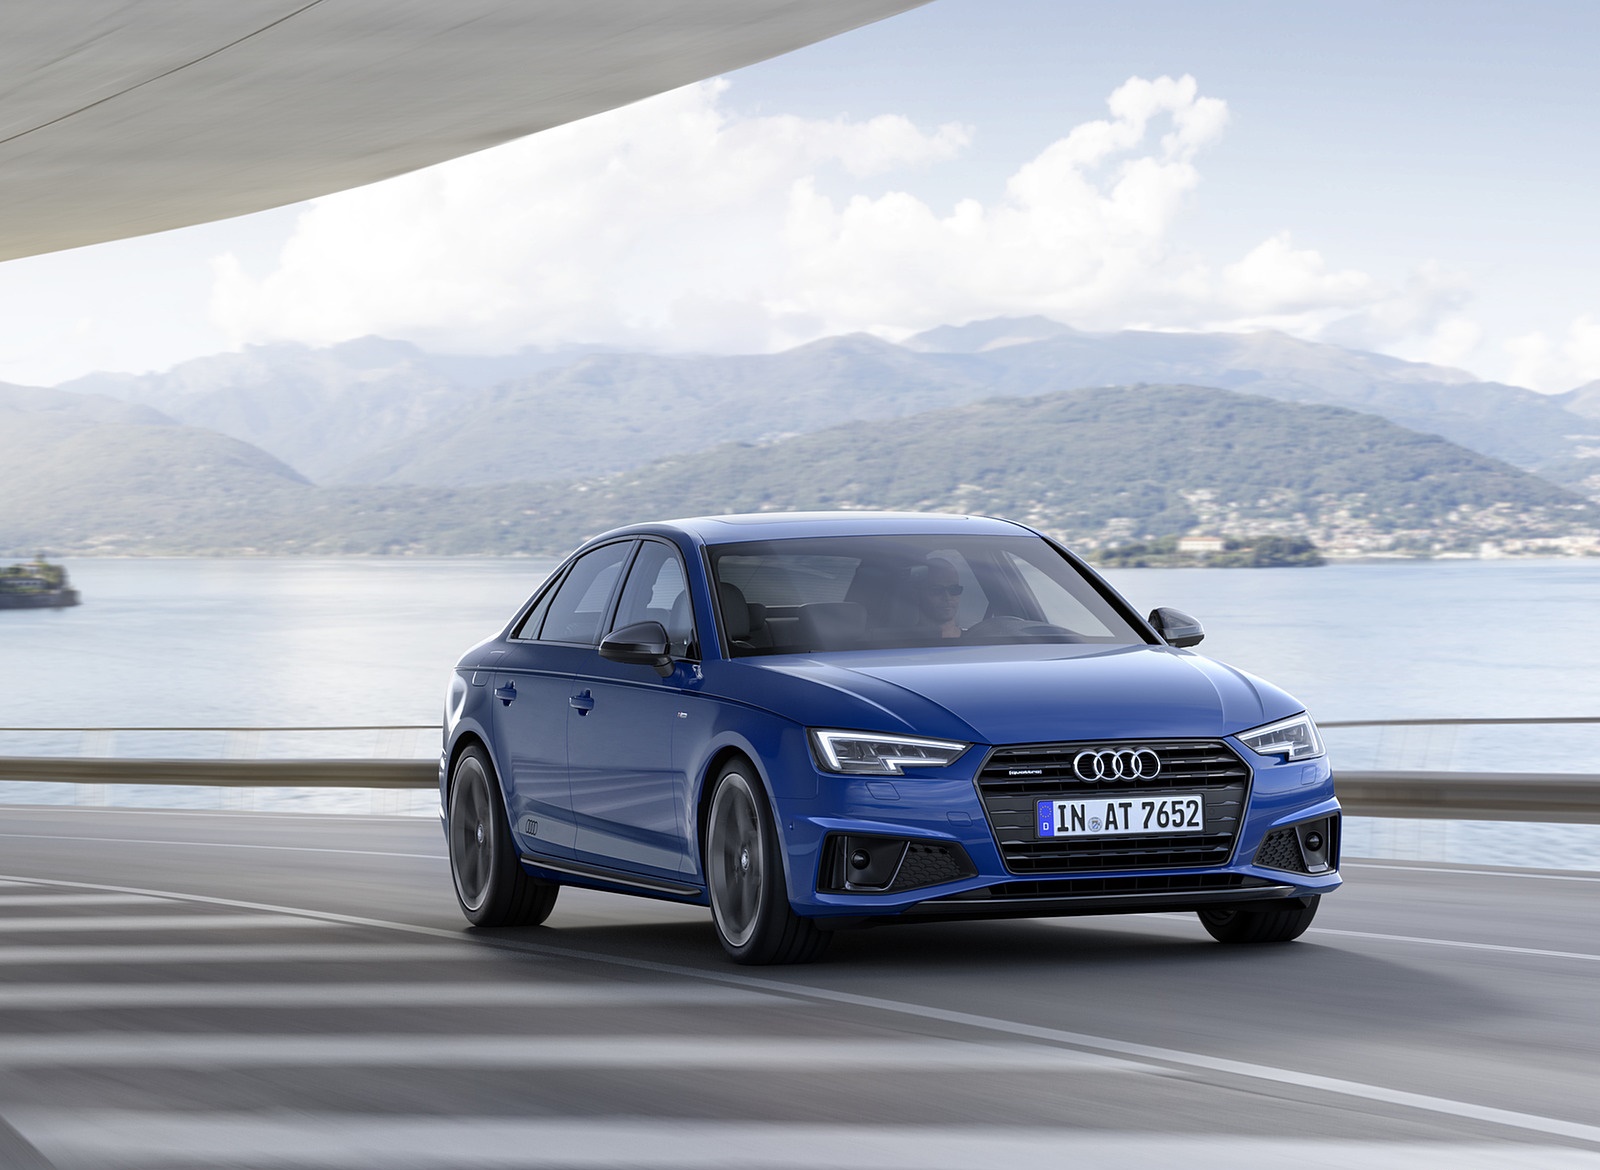 2019 Audi A4 (Color: Ascari Blue) Front Three-Quarter Wallpapers #25 of 35